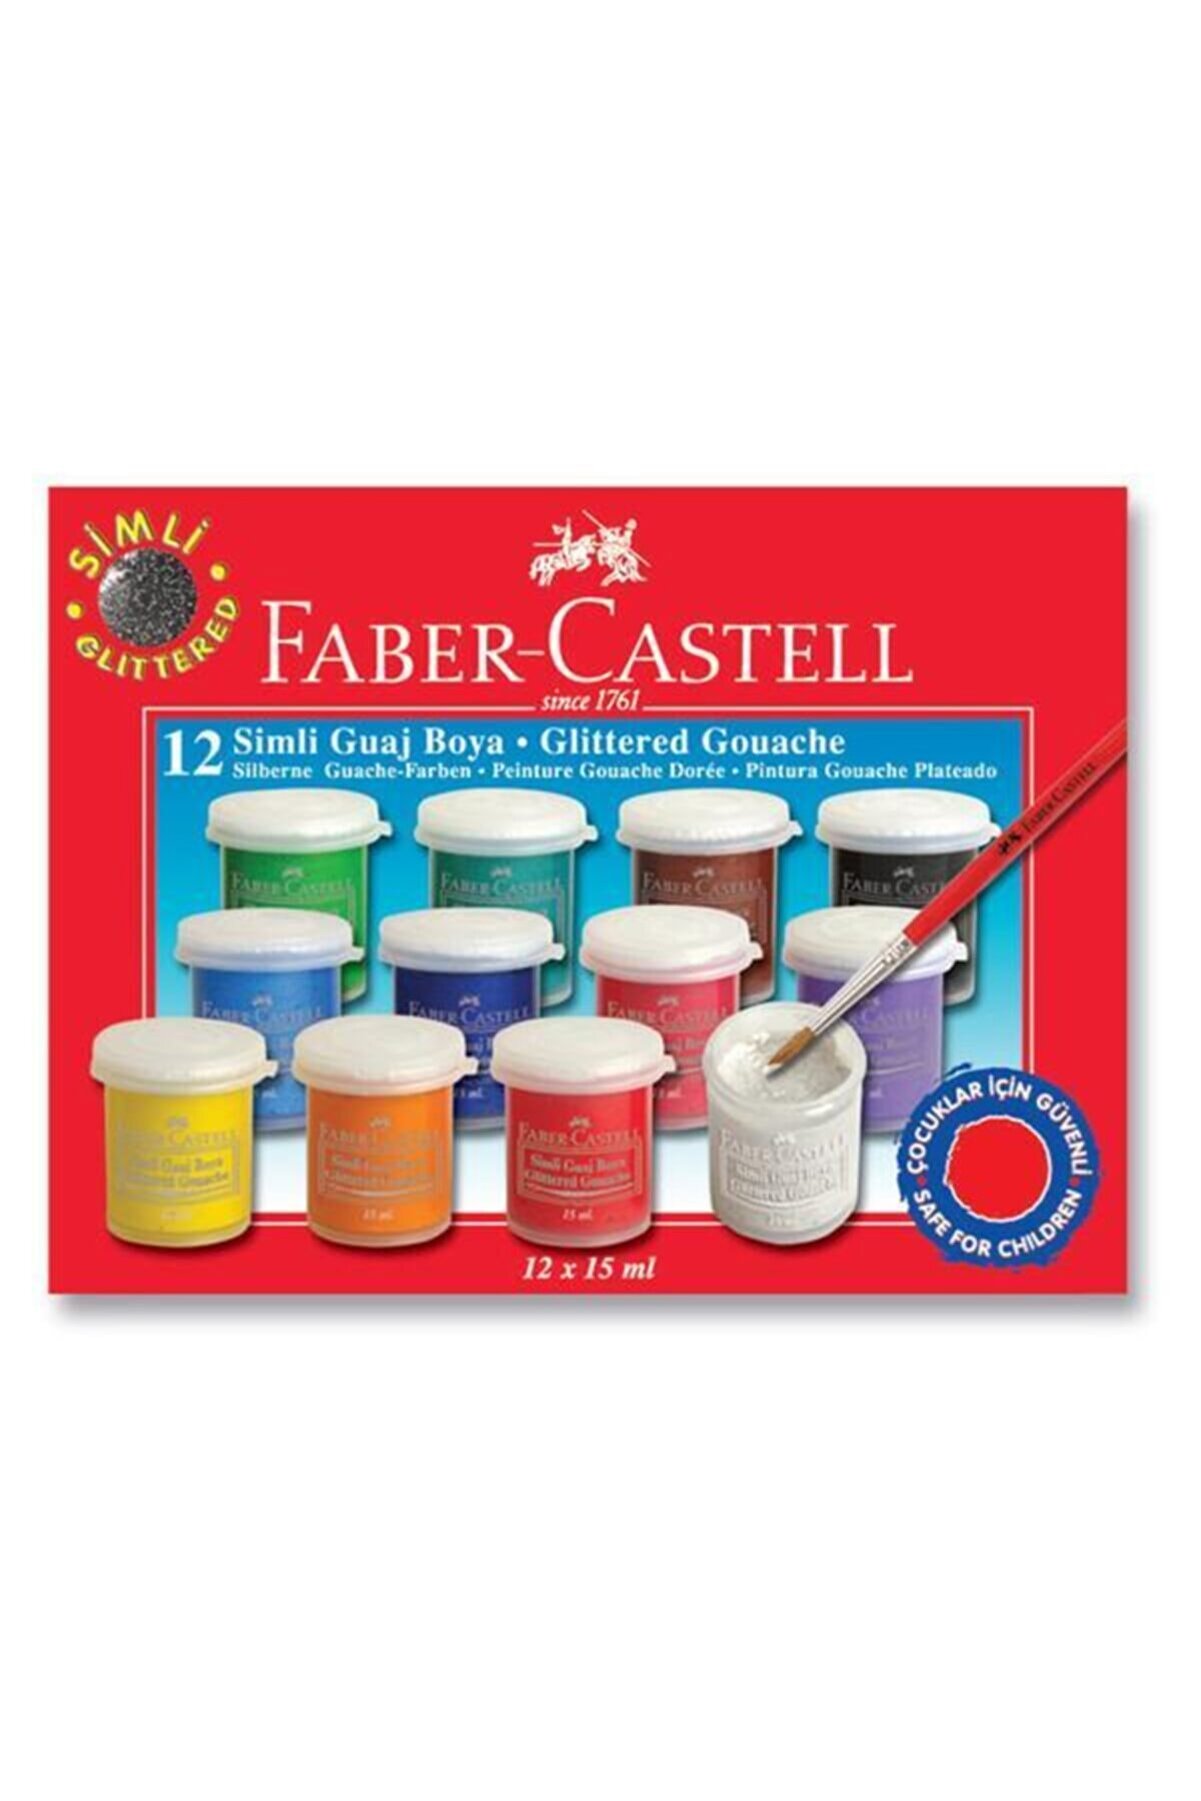 Faber Castell Faber Guaj Boya Simli 12 Li 160404 /